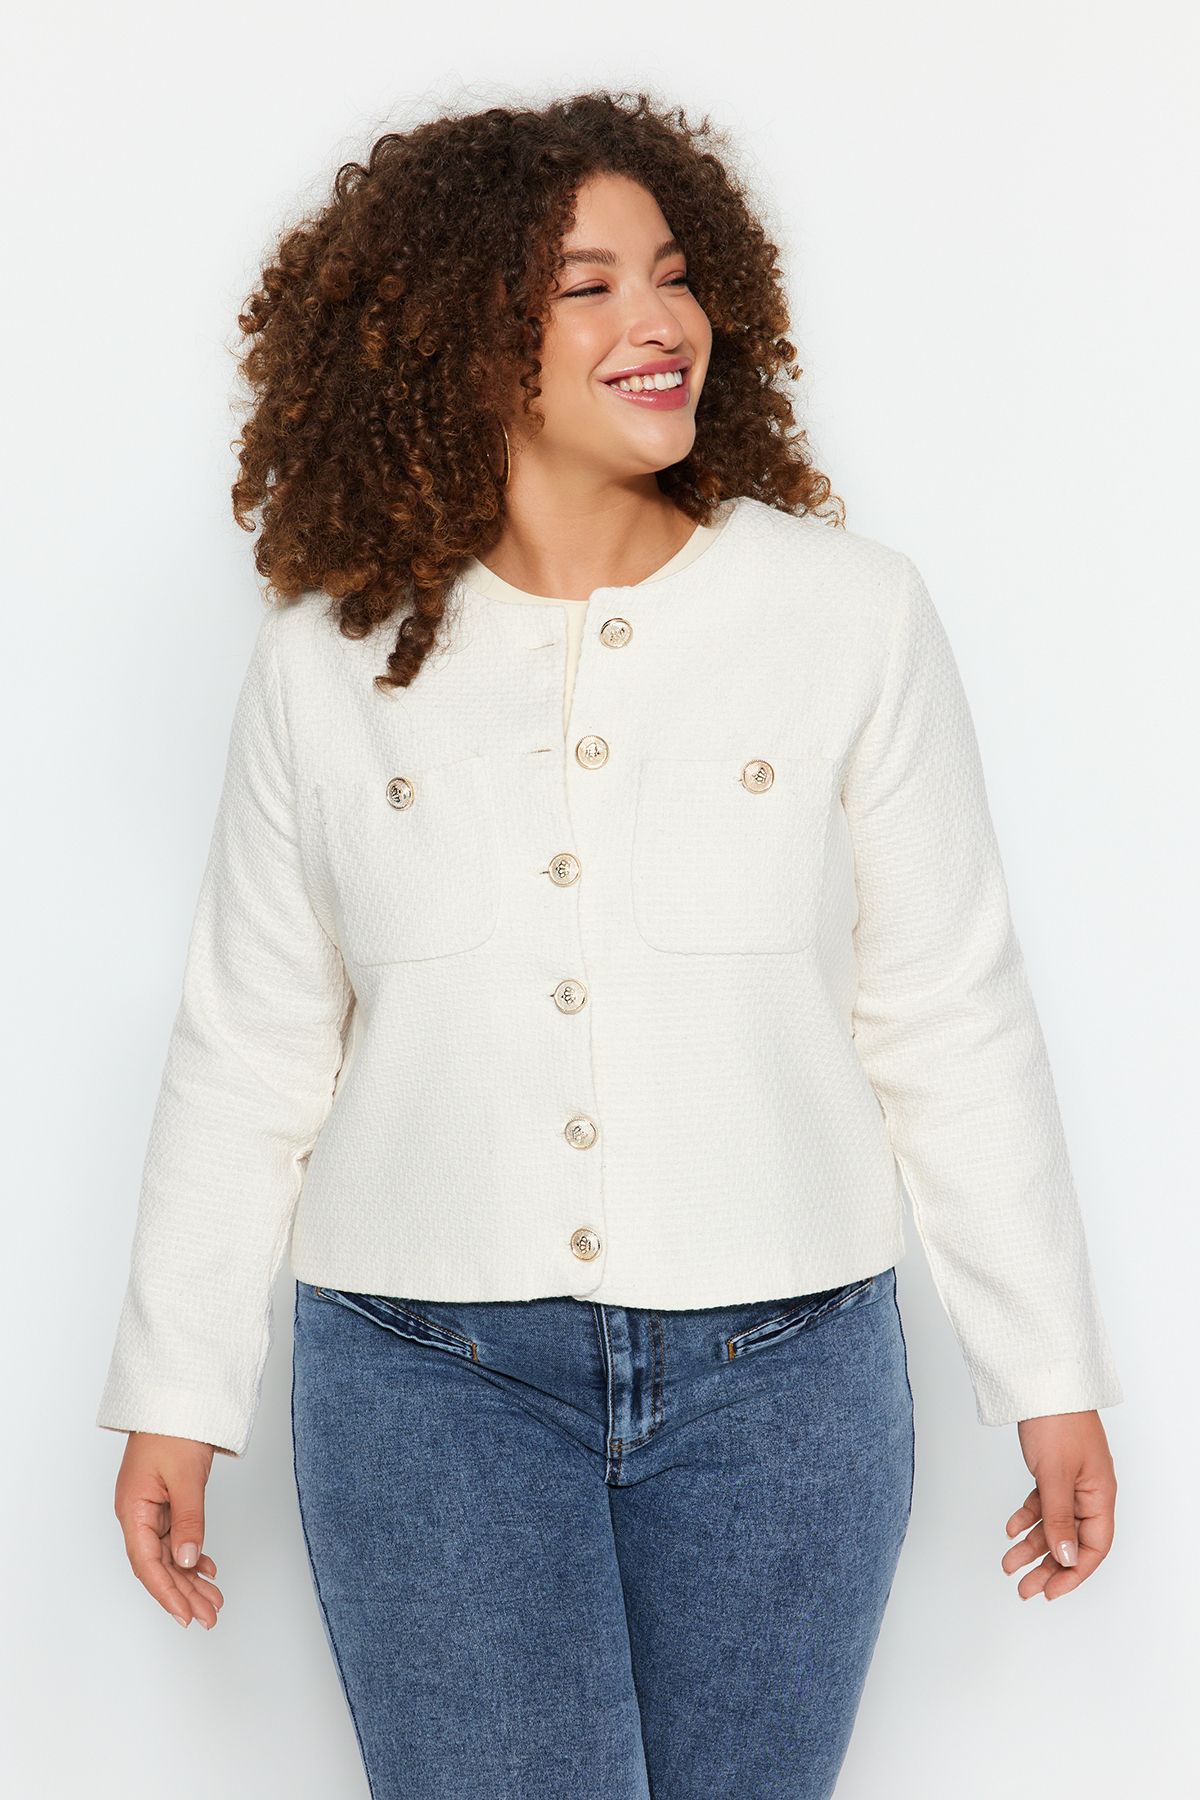 Plus Size White Denim Jacket With Pockets | Curvaceous